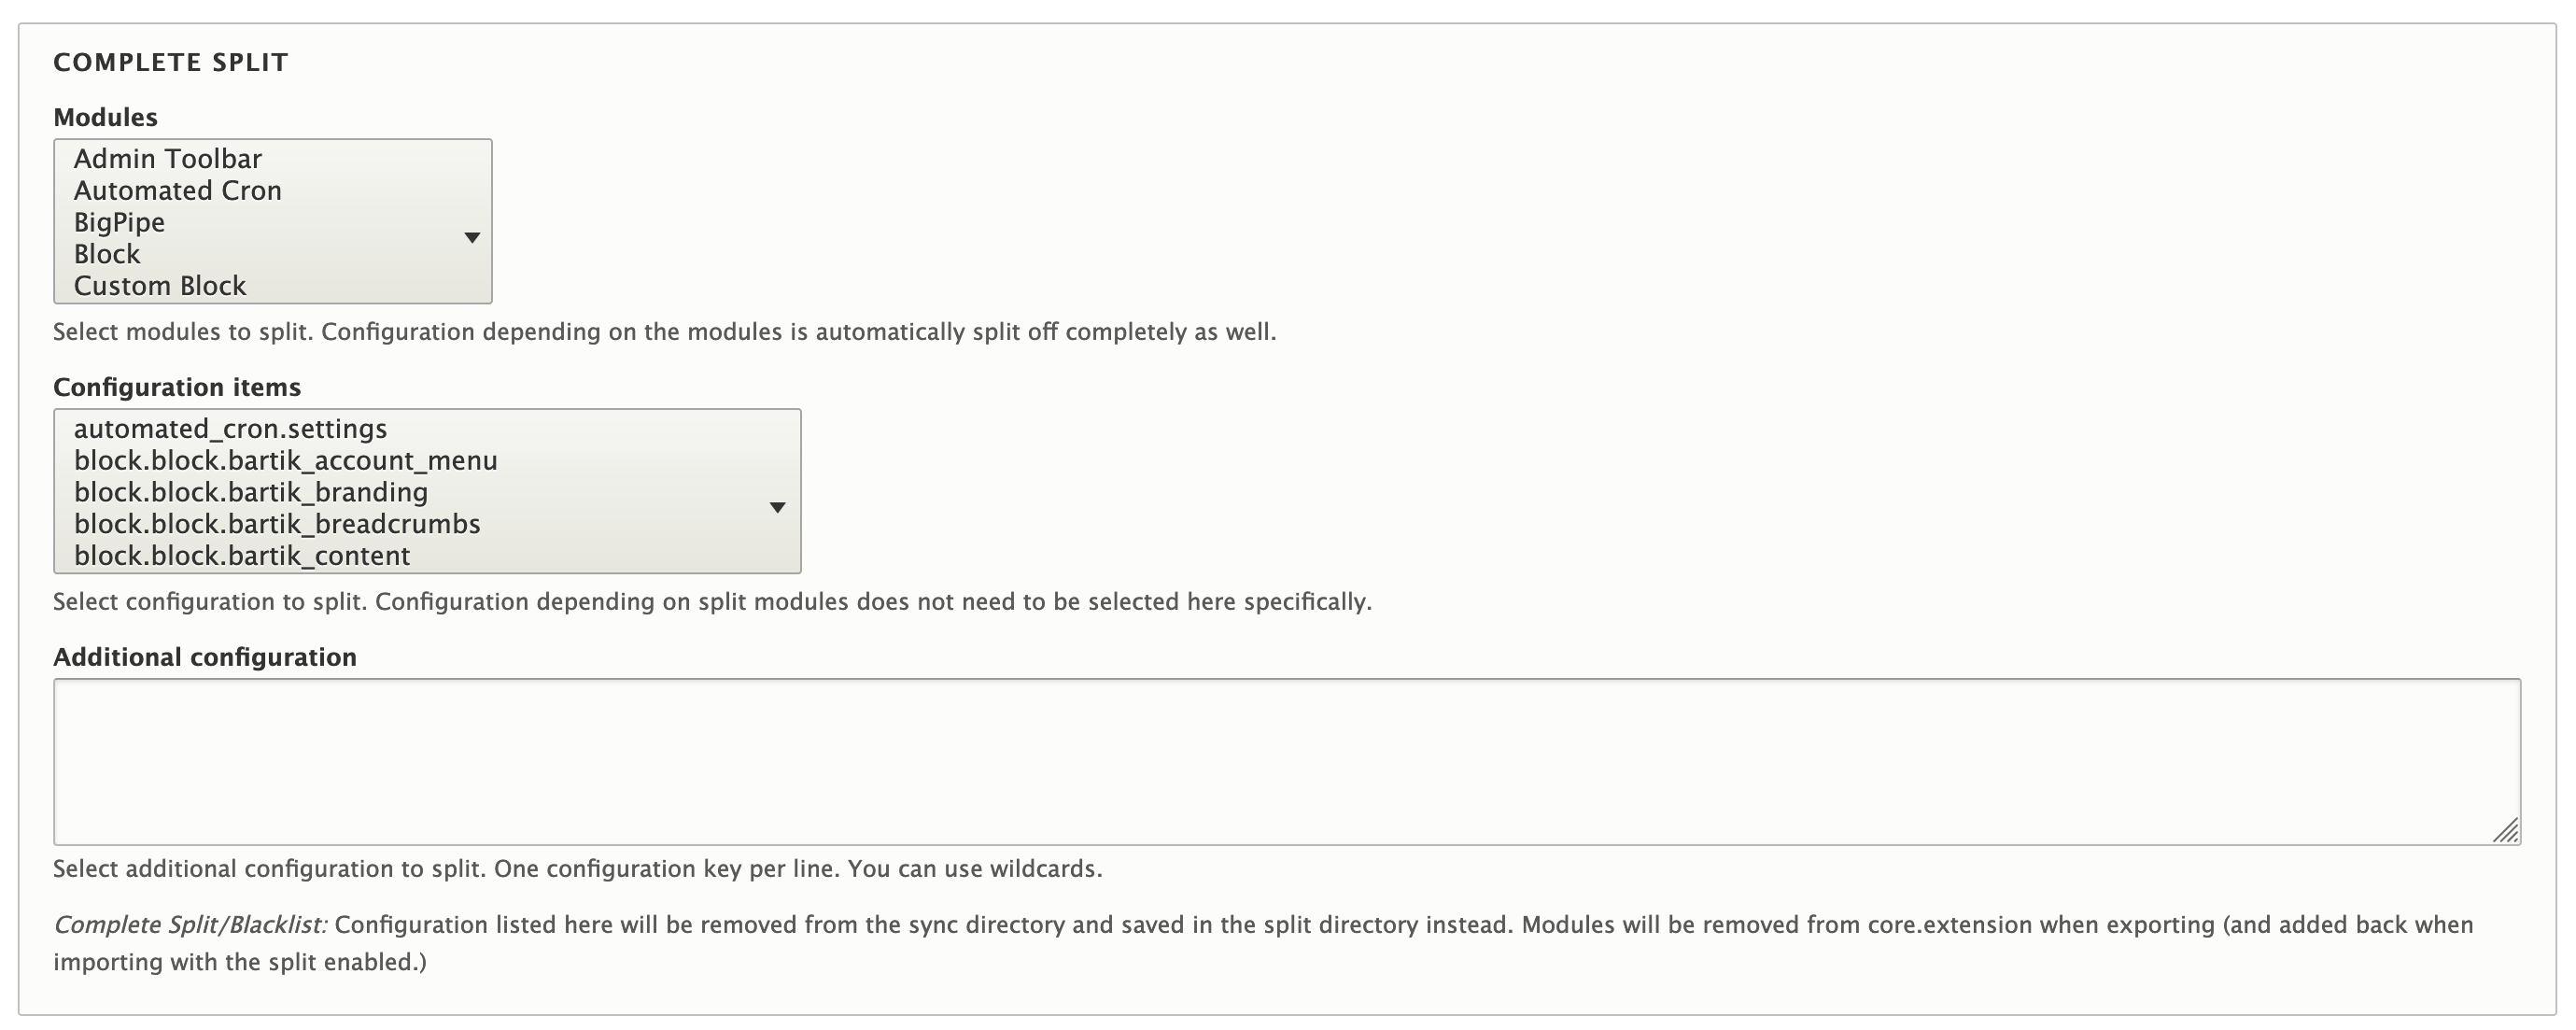 Screenshot of configuration split complete-split/blacklist settings